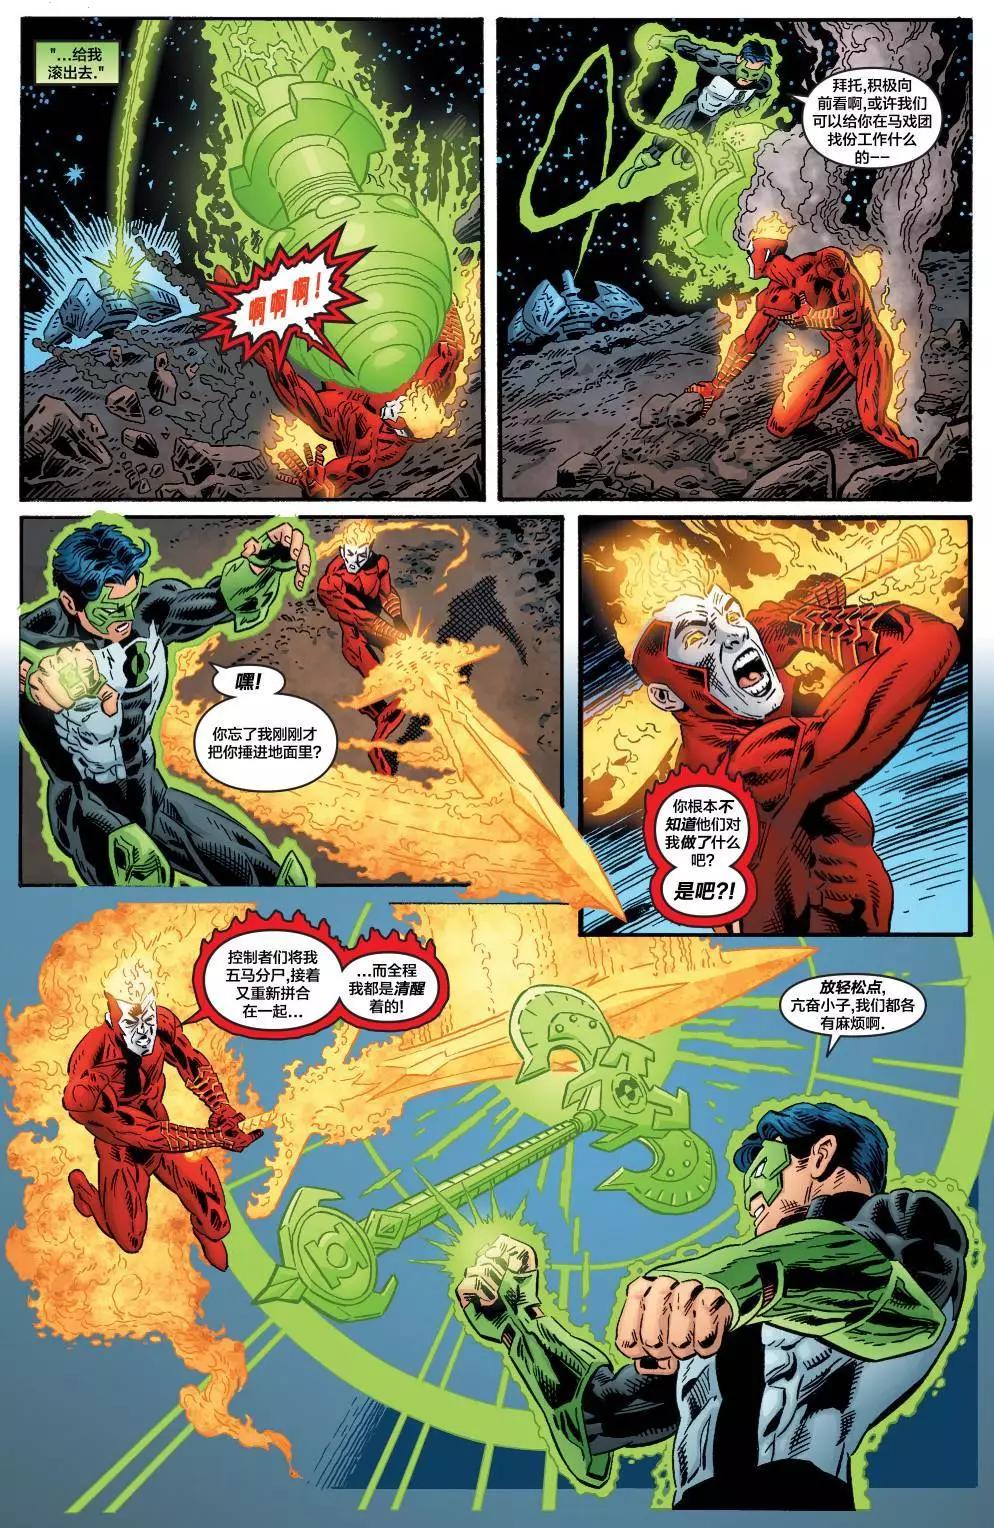 DC-追溯經典 - 綠燈俠-90年代 - 3